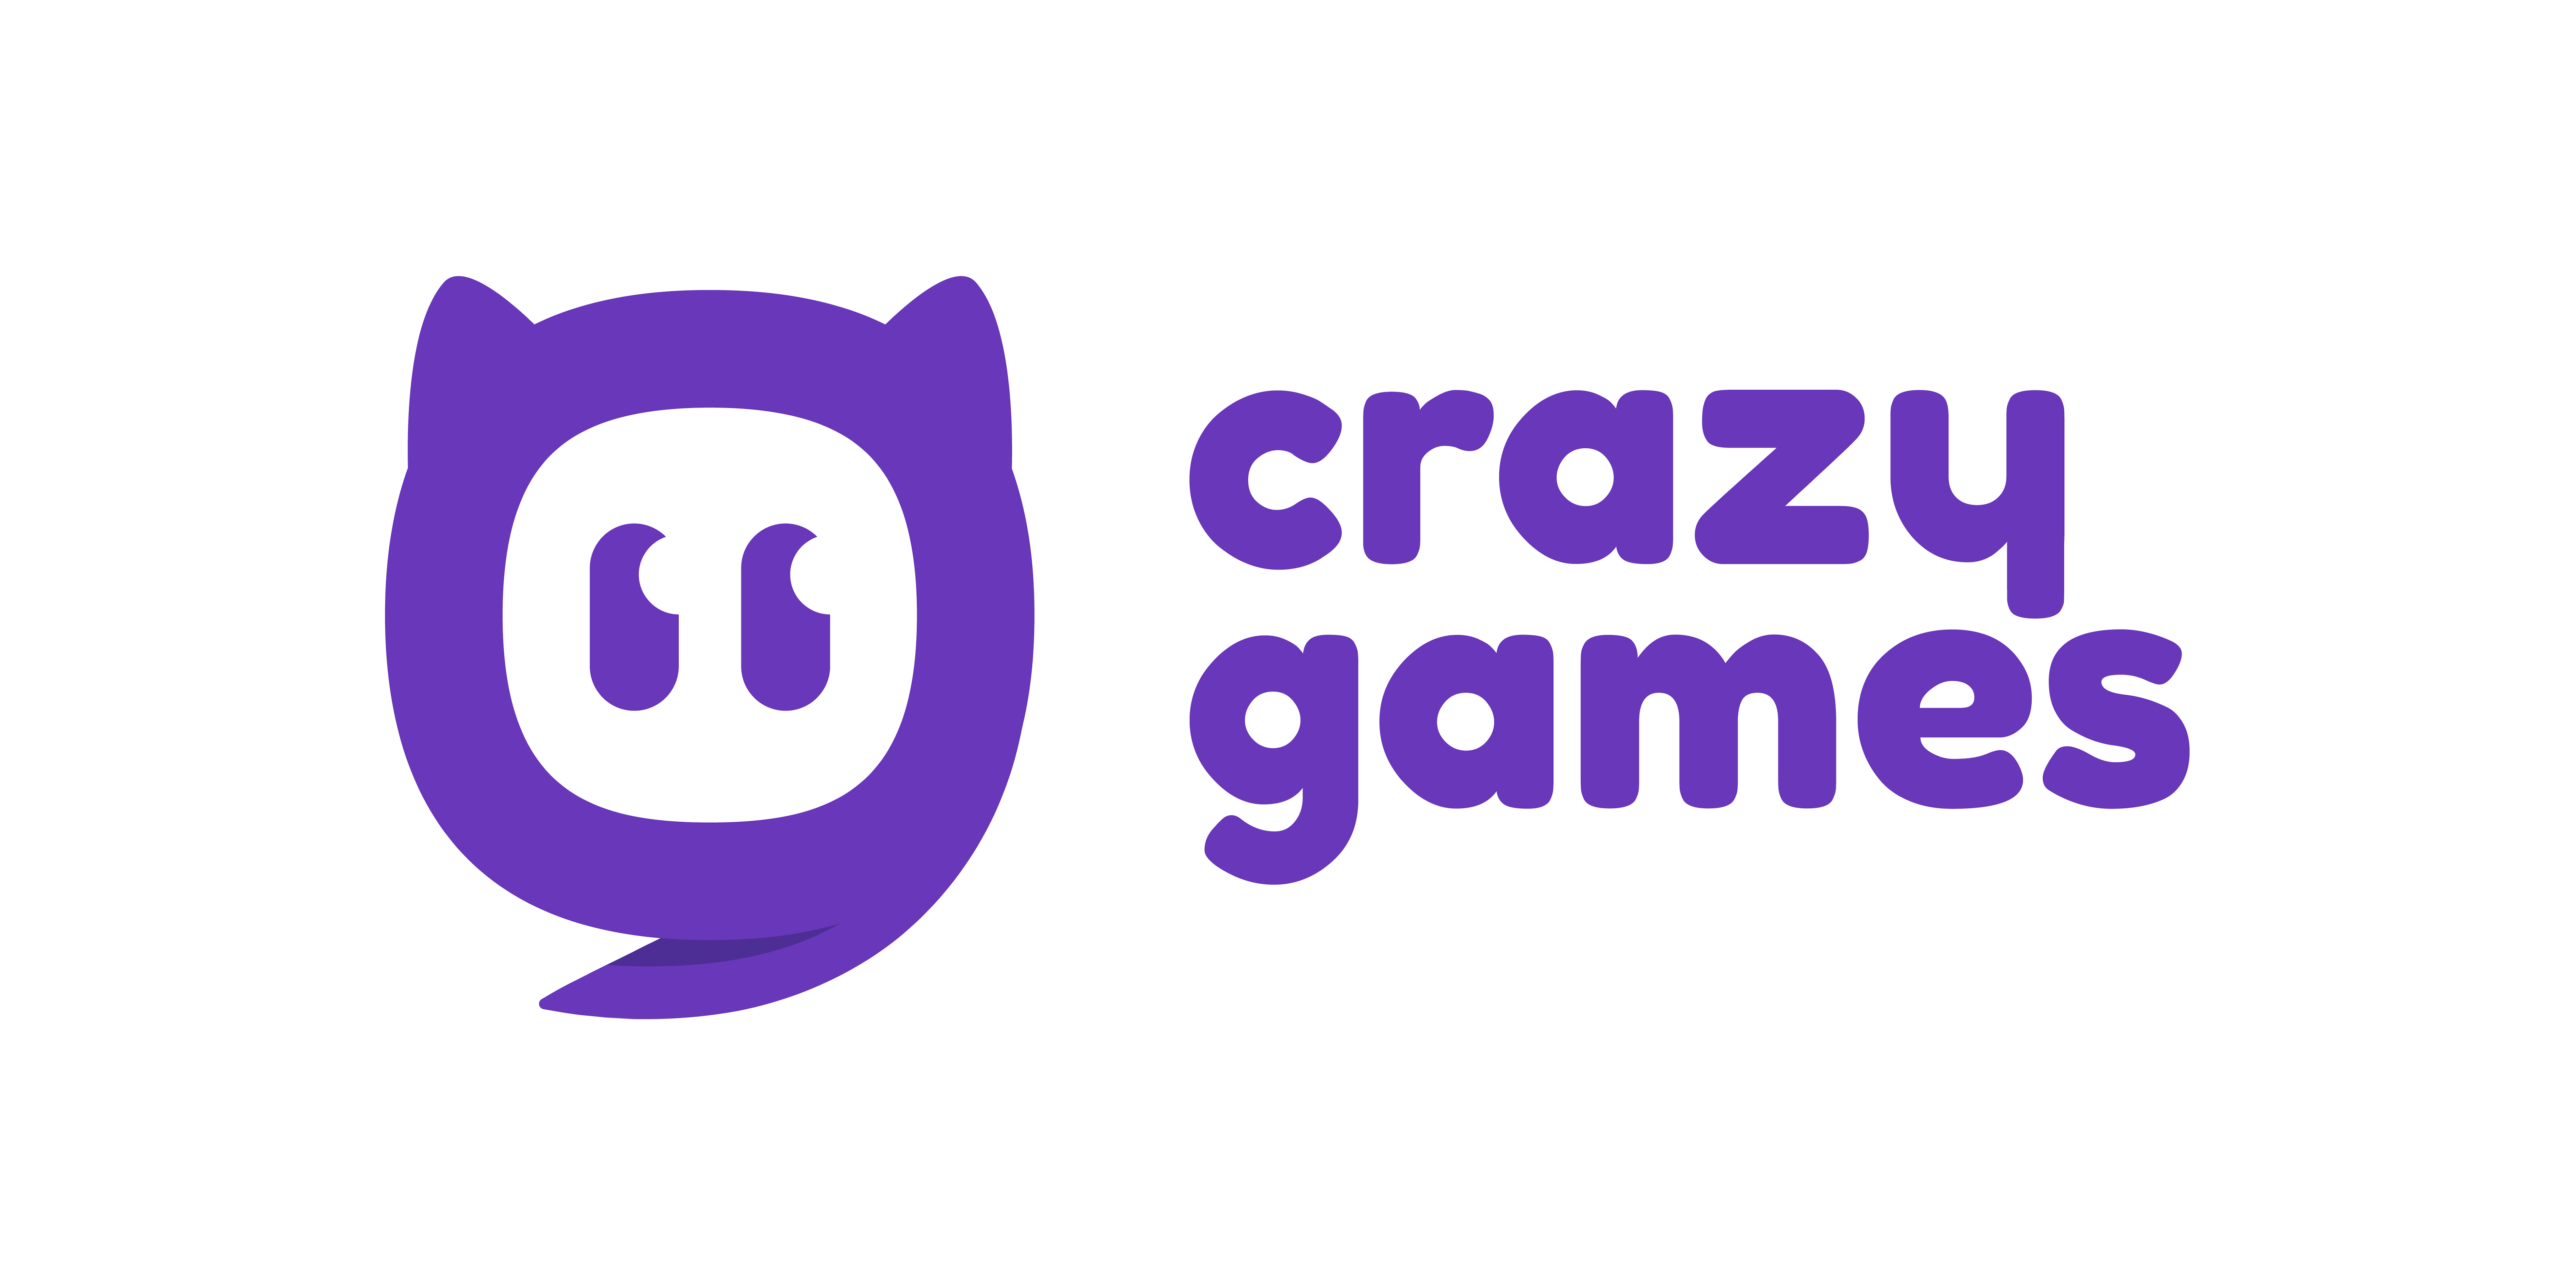 text twist 2 crazy games